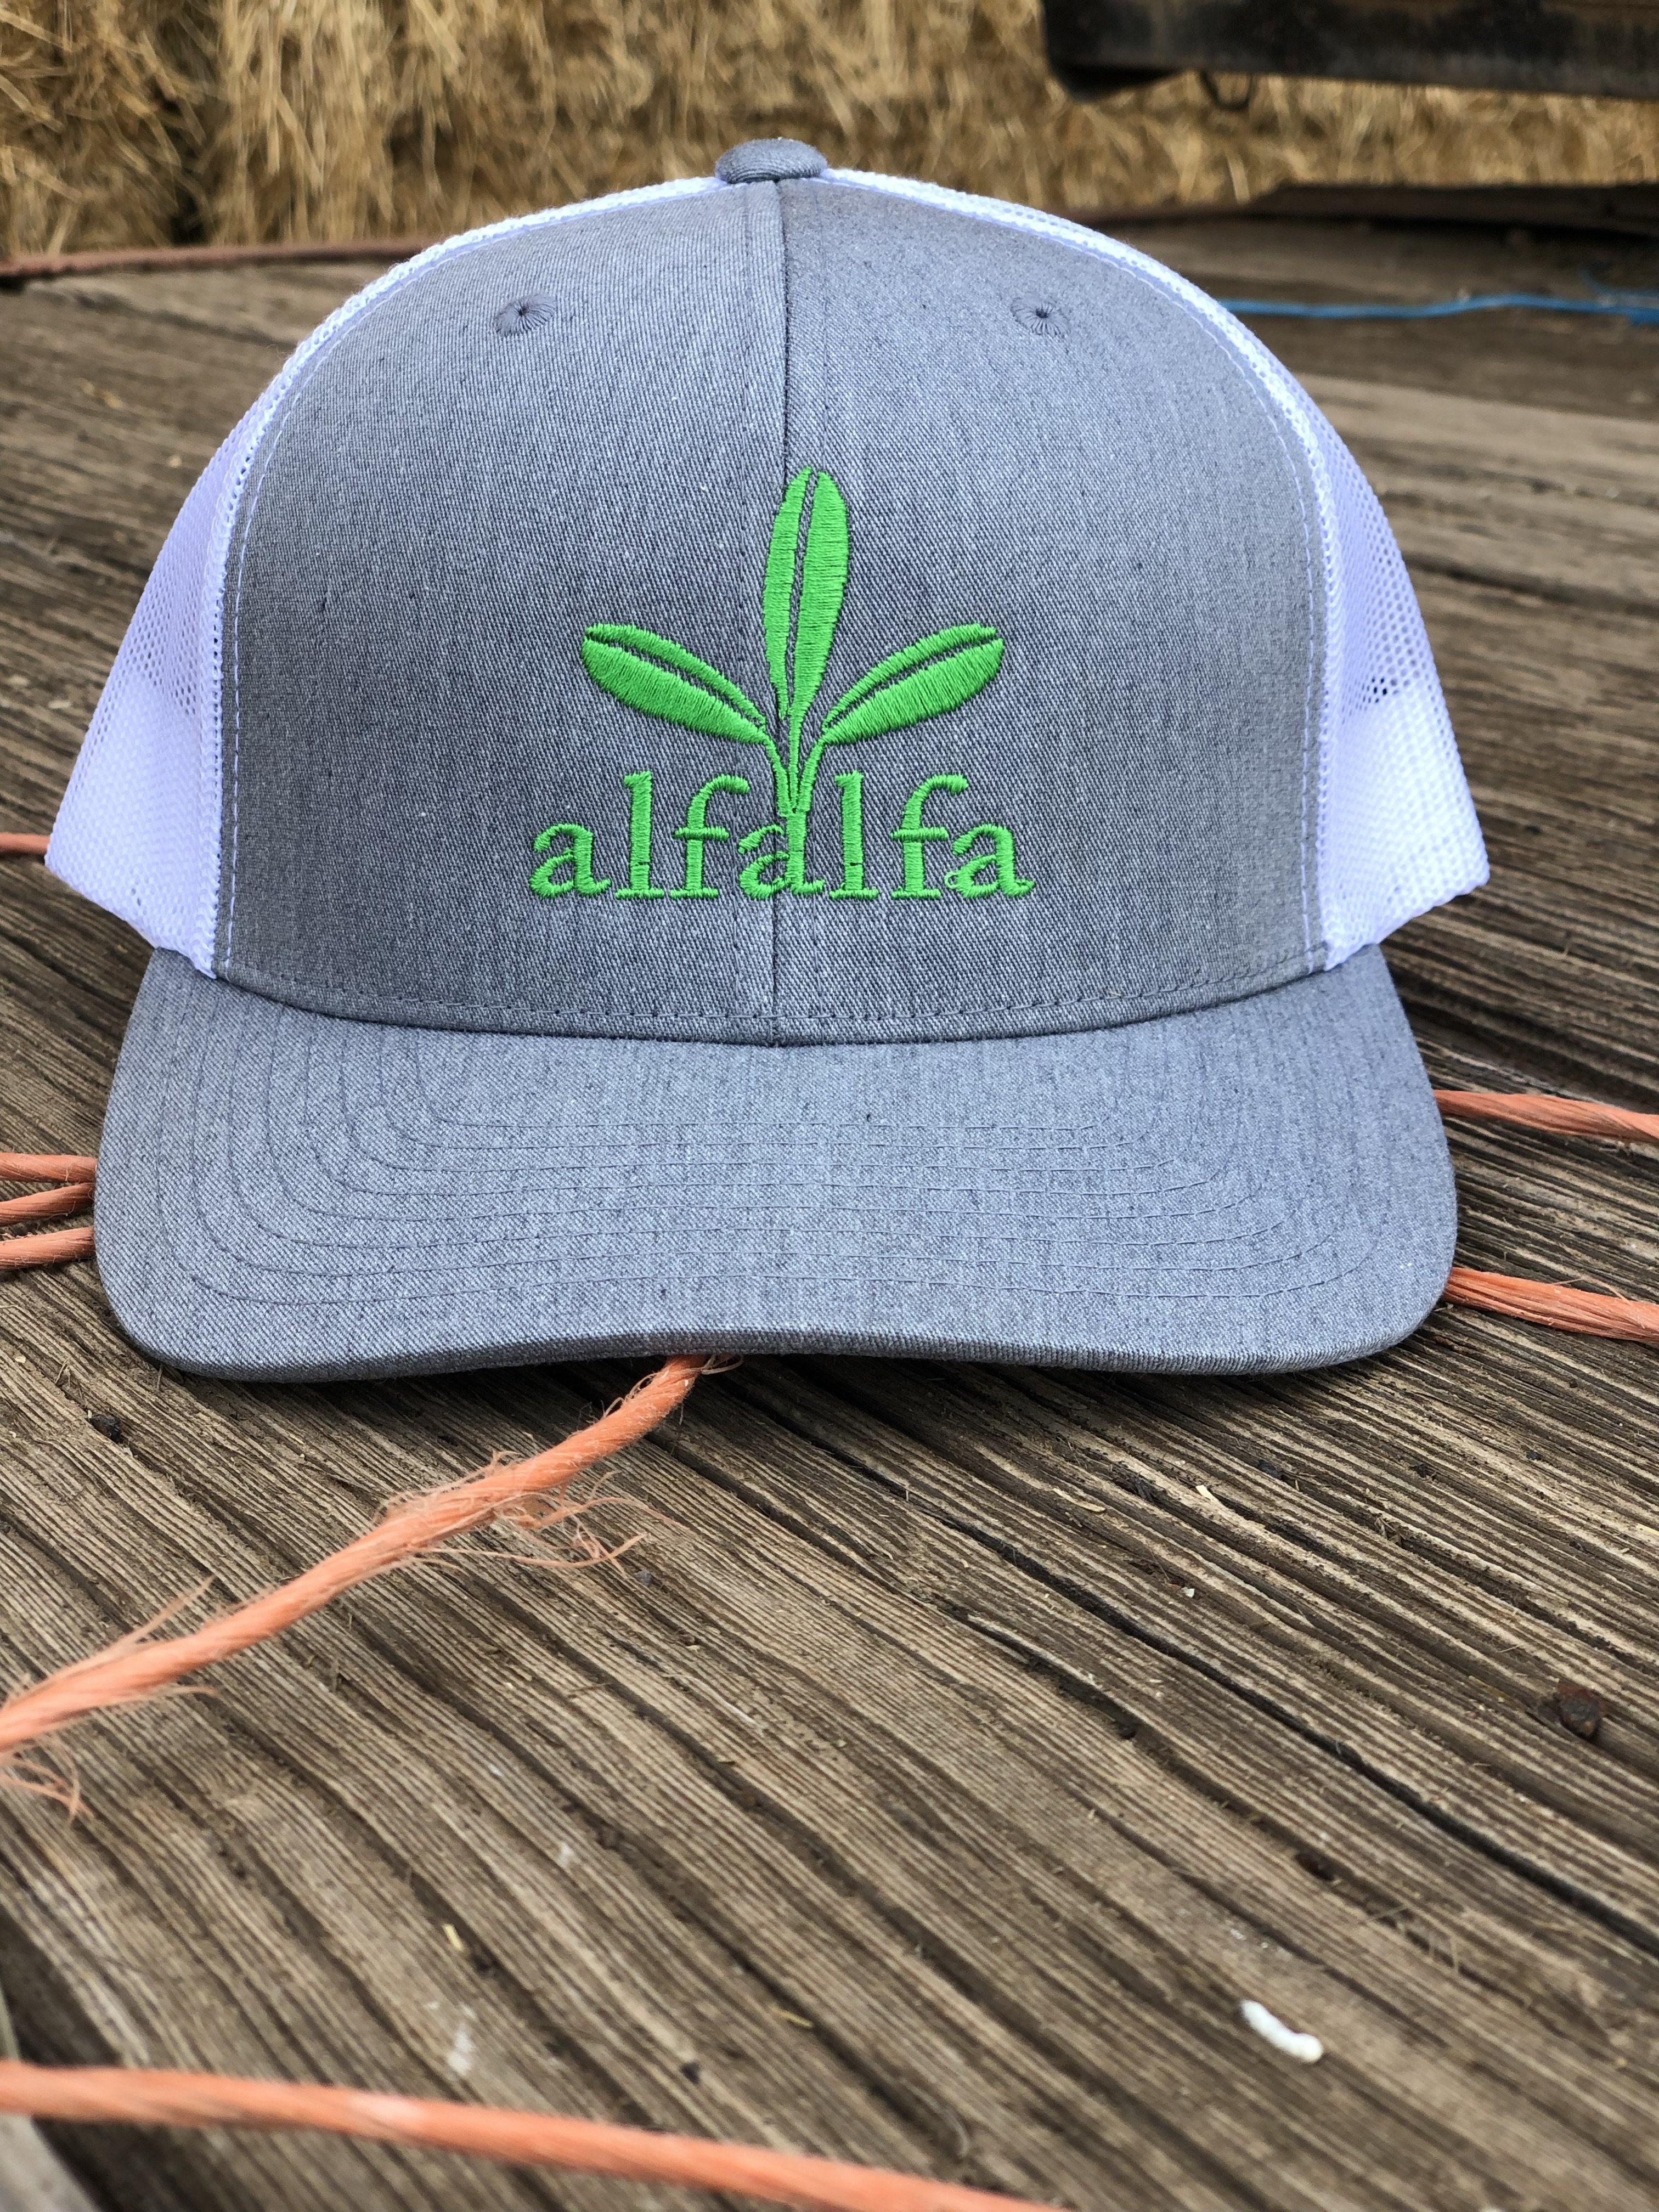 Bales Alfalfa Brand Hay Sales/1891 Bales Hay - Homestead The Hat: